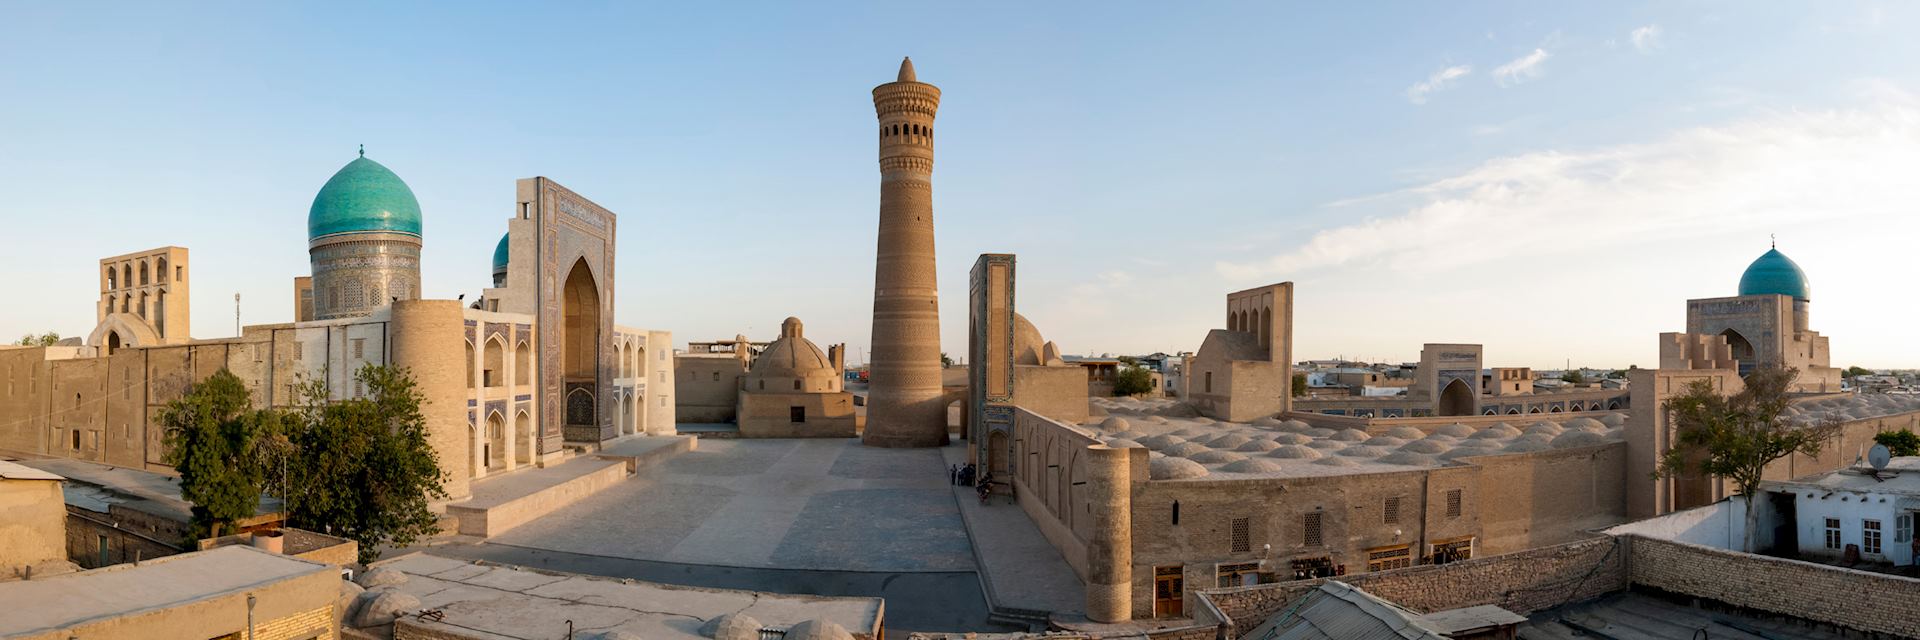 Bukhara old town in Uzbekistan